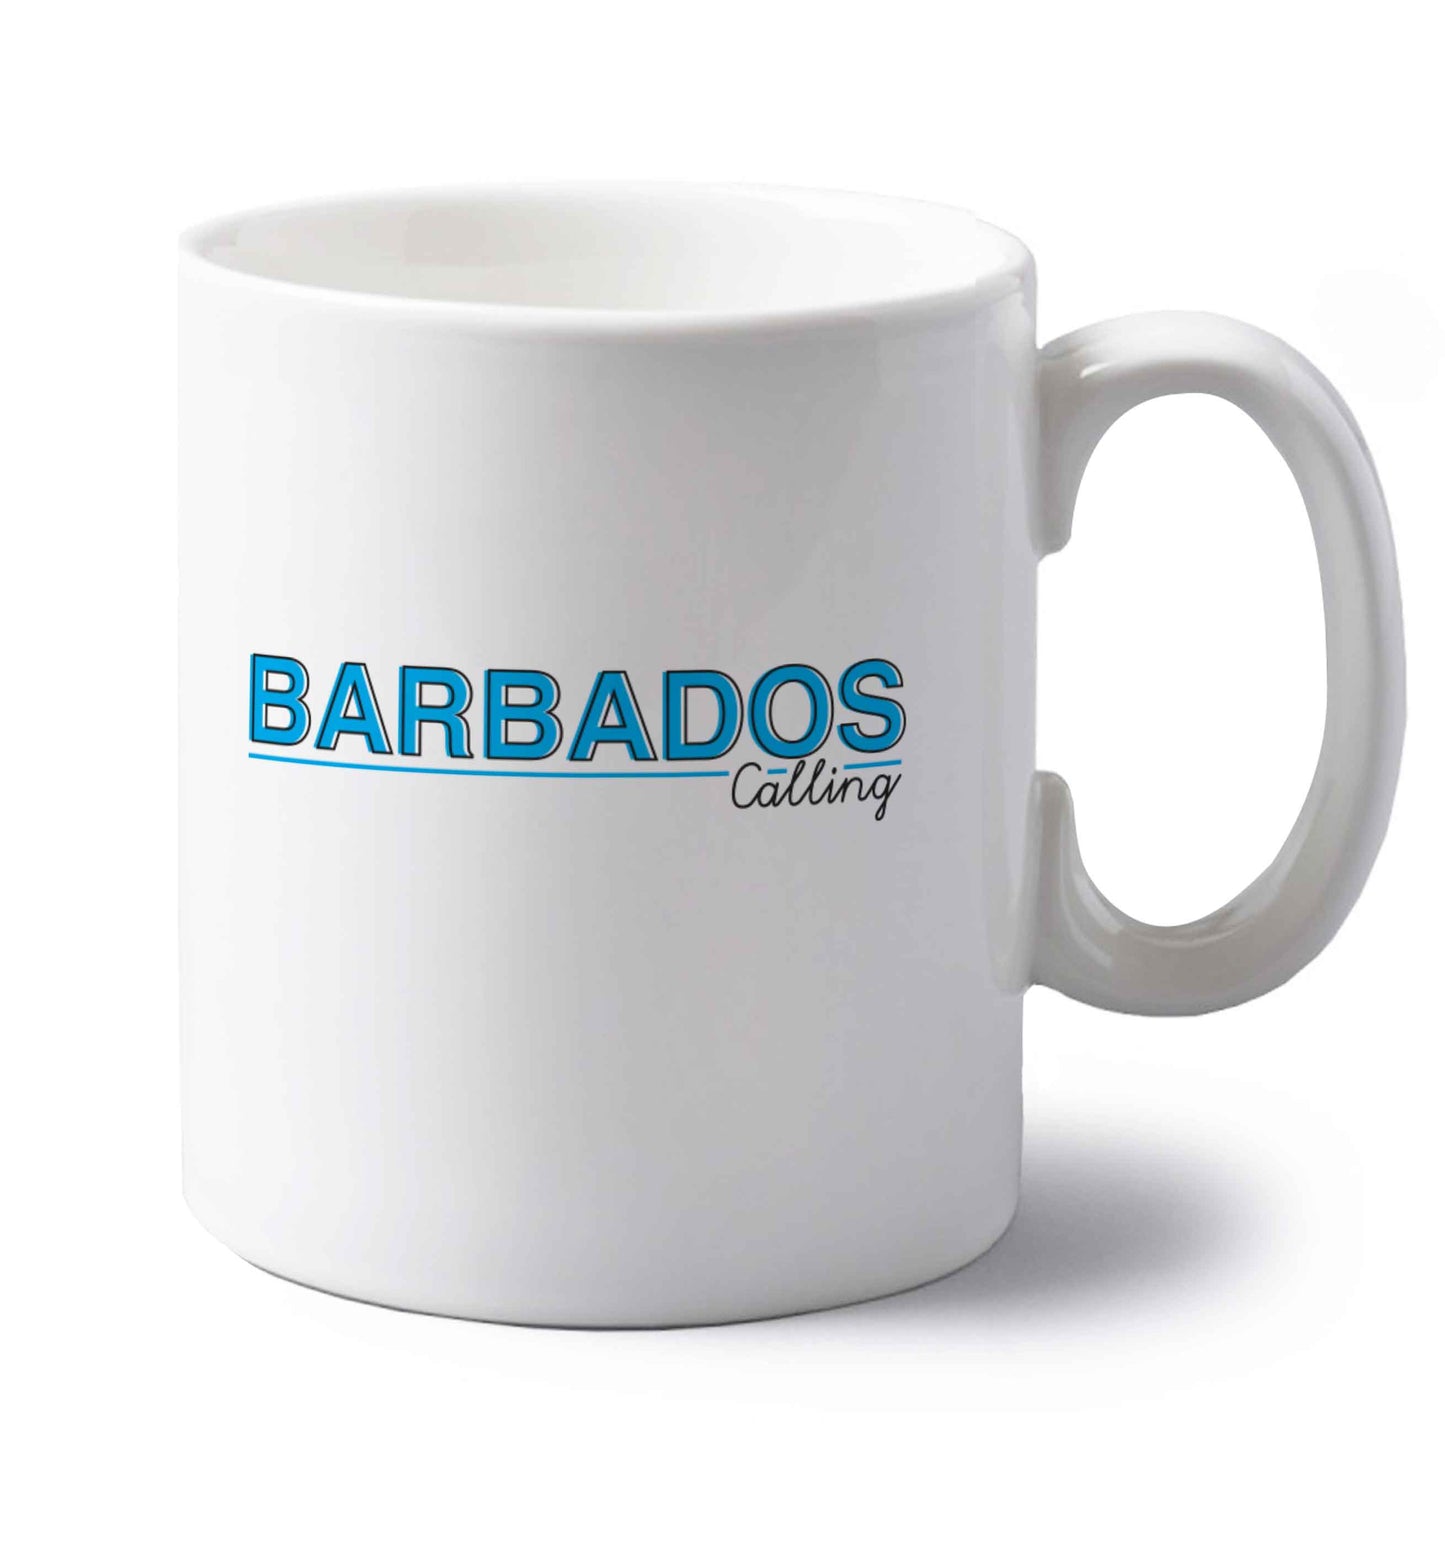 Barbados calling left handed white ceramic mug 